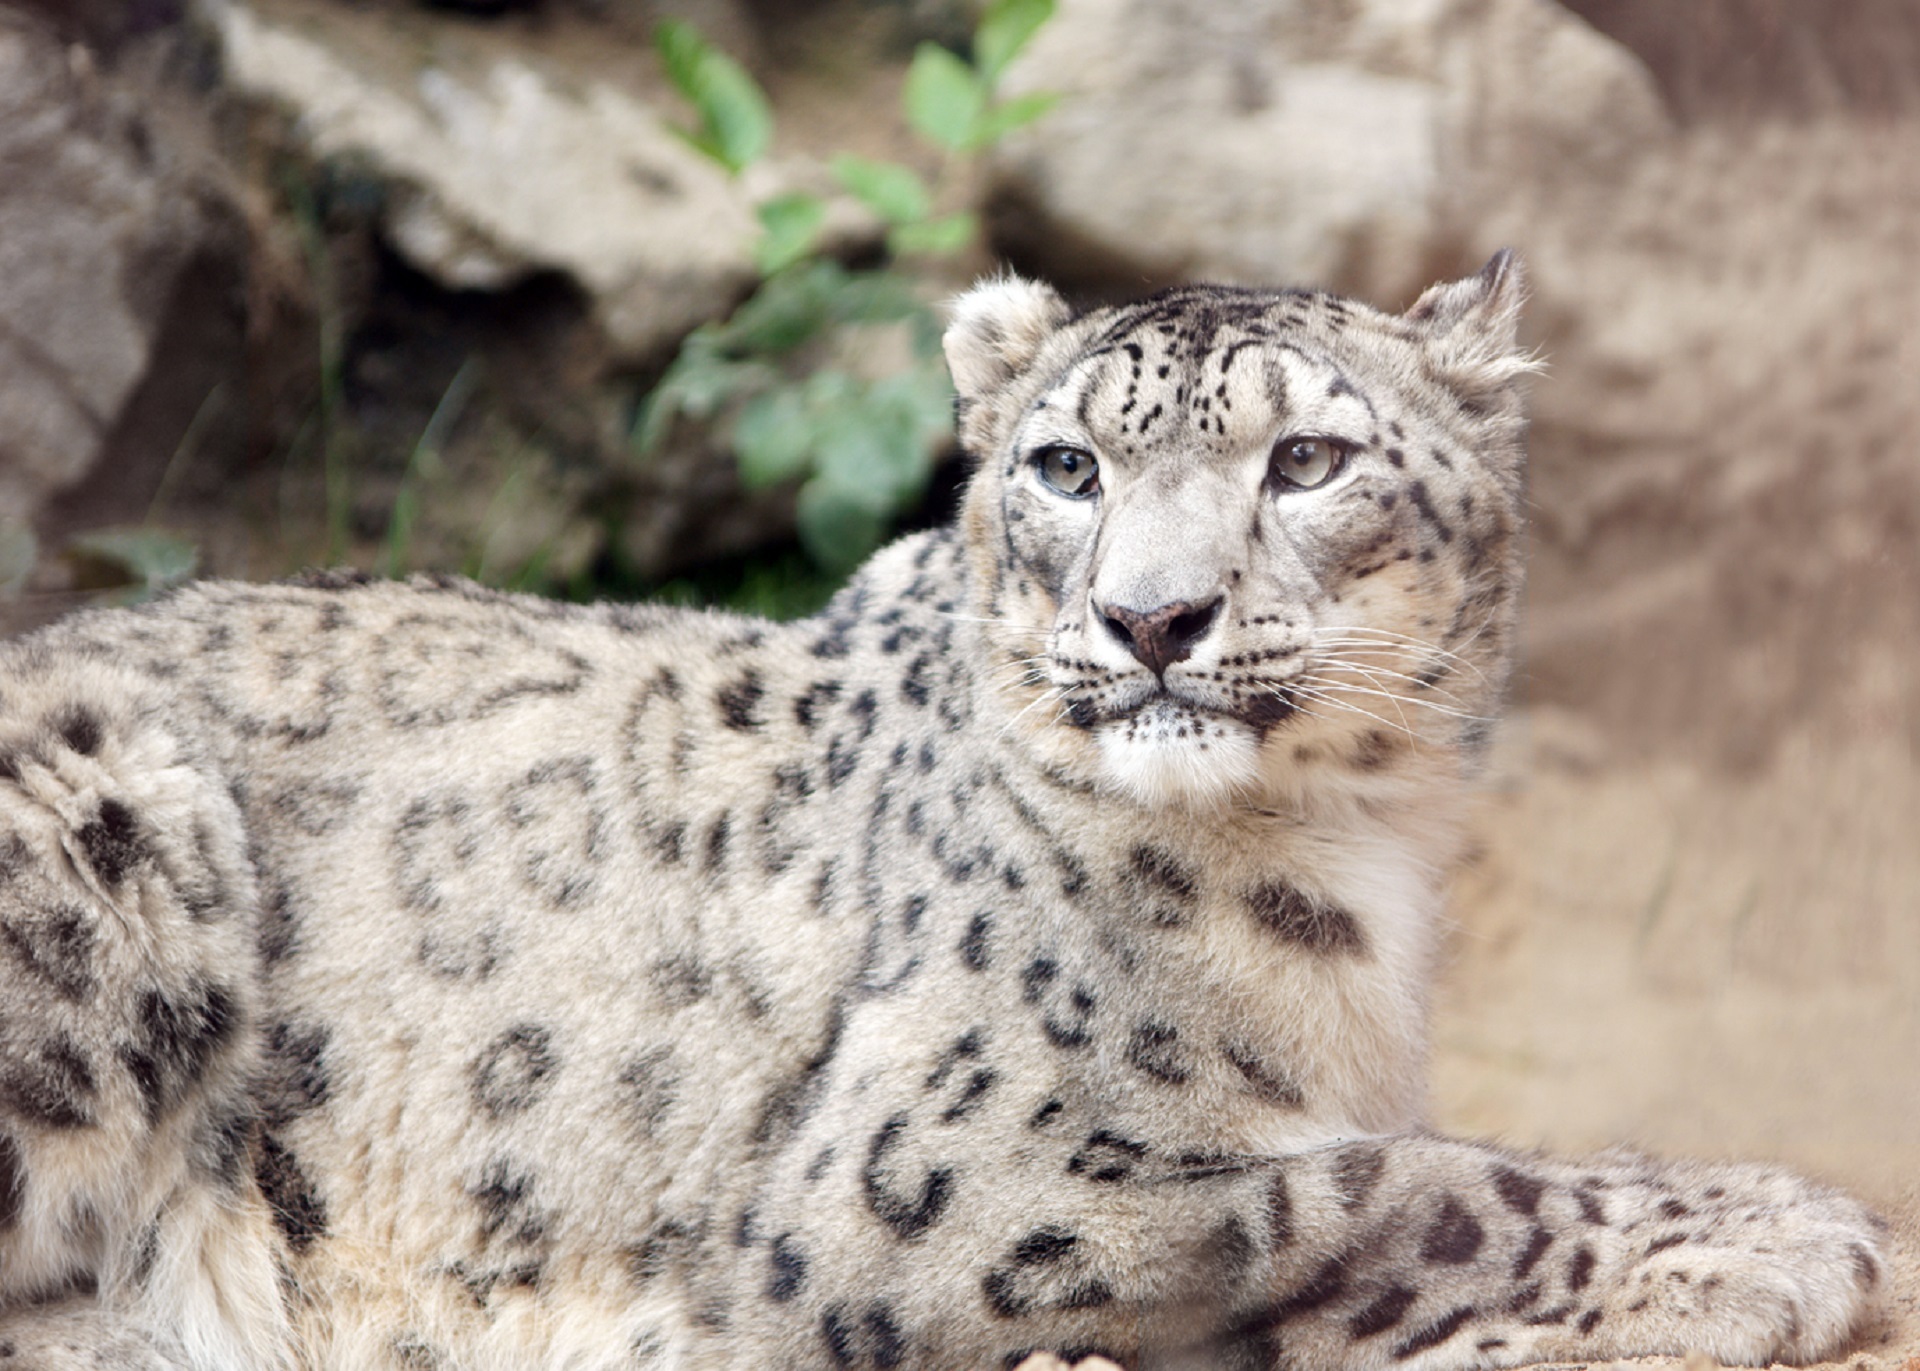 Snow leopard pose photo